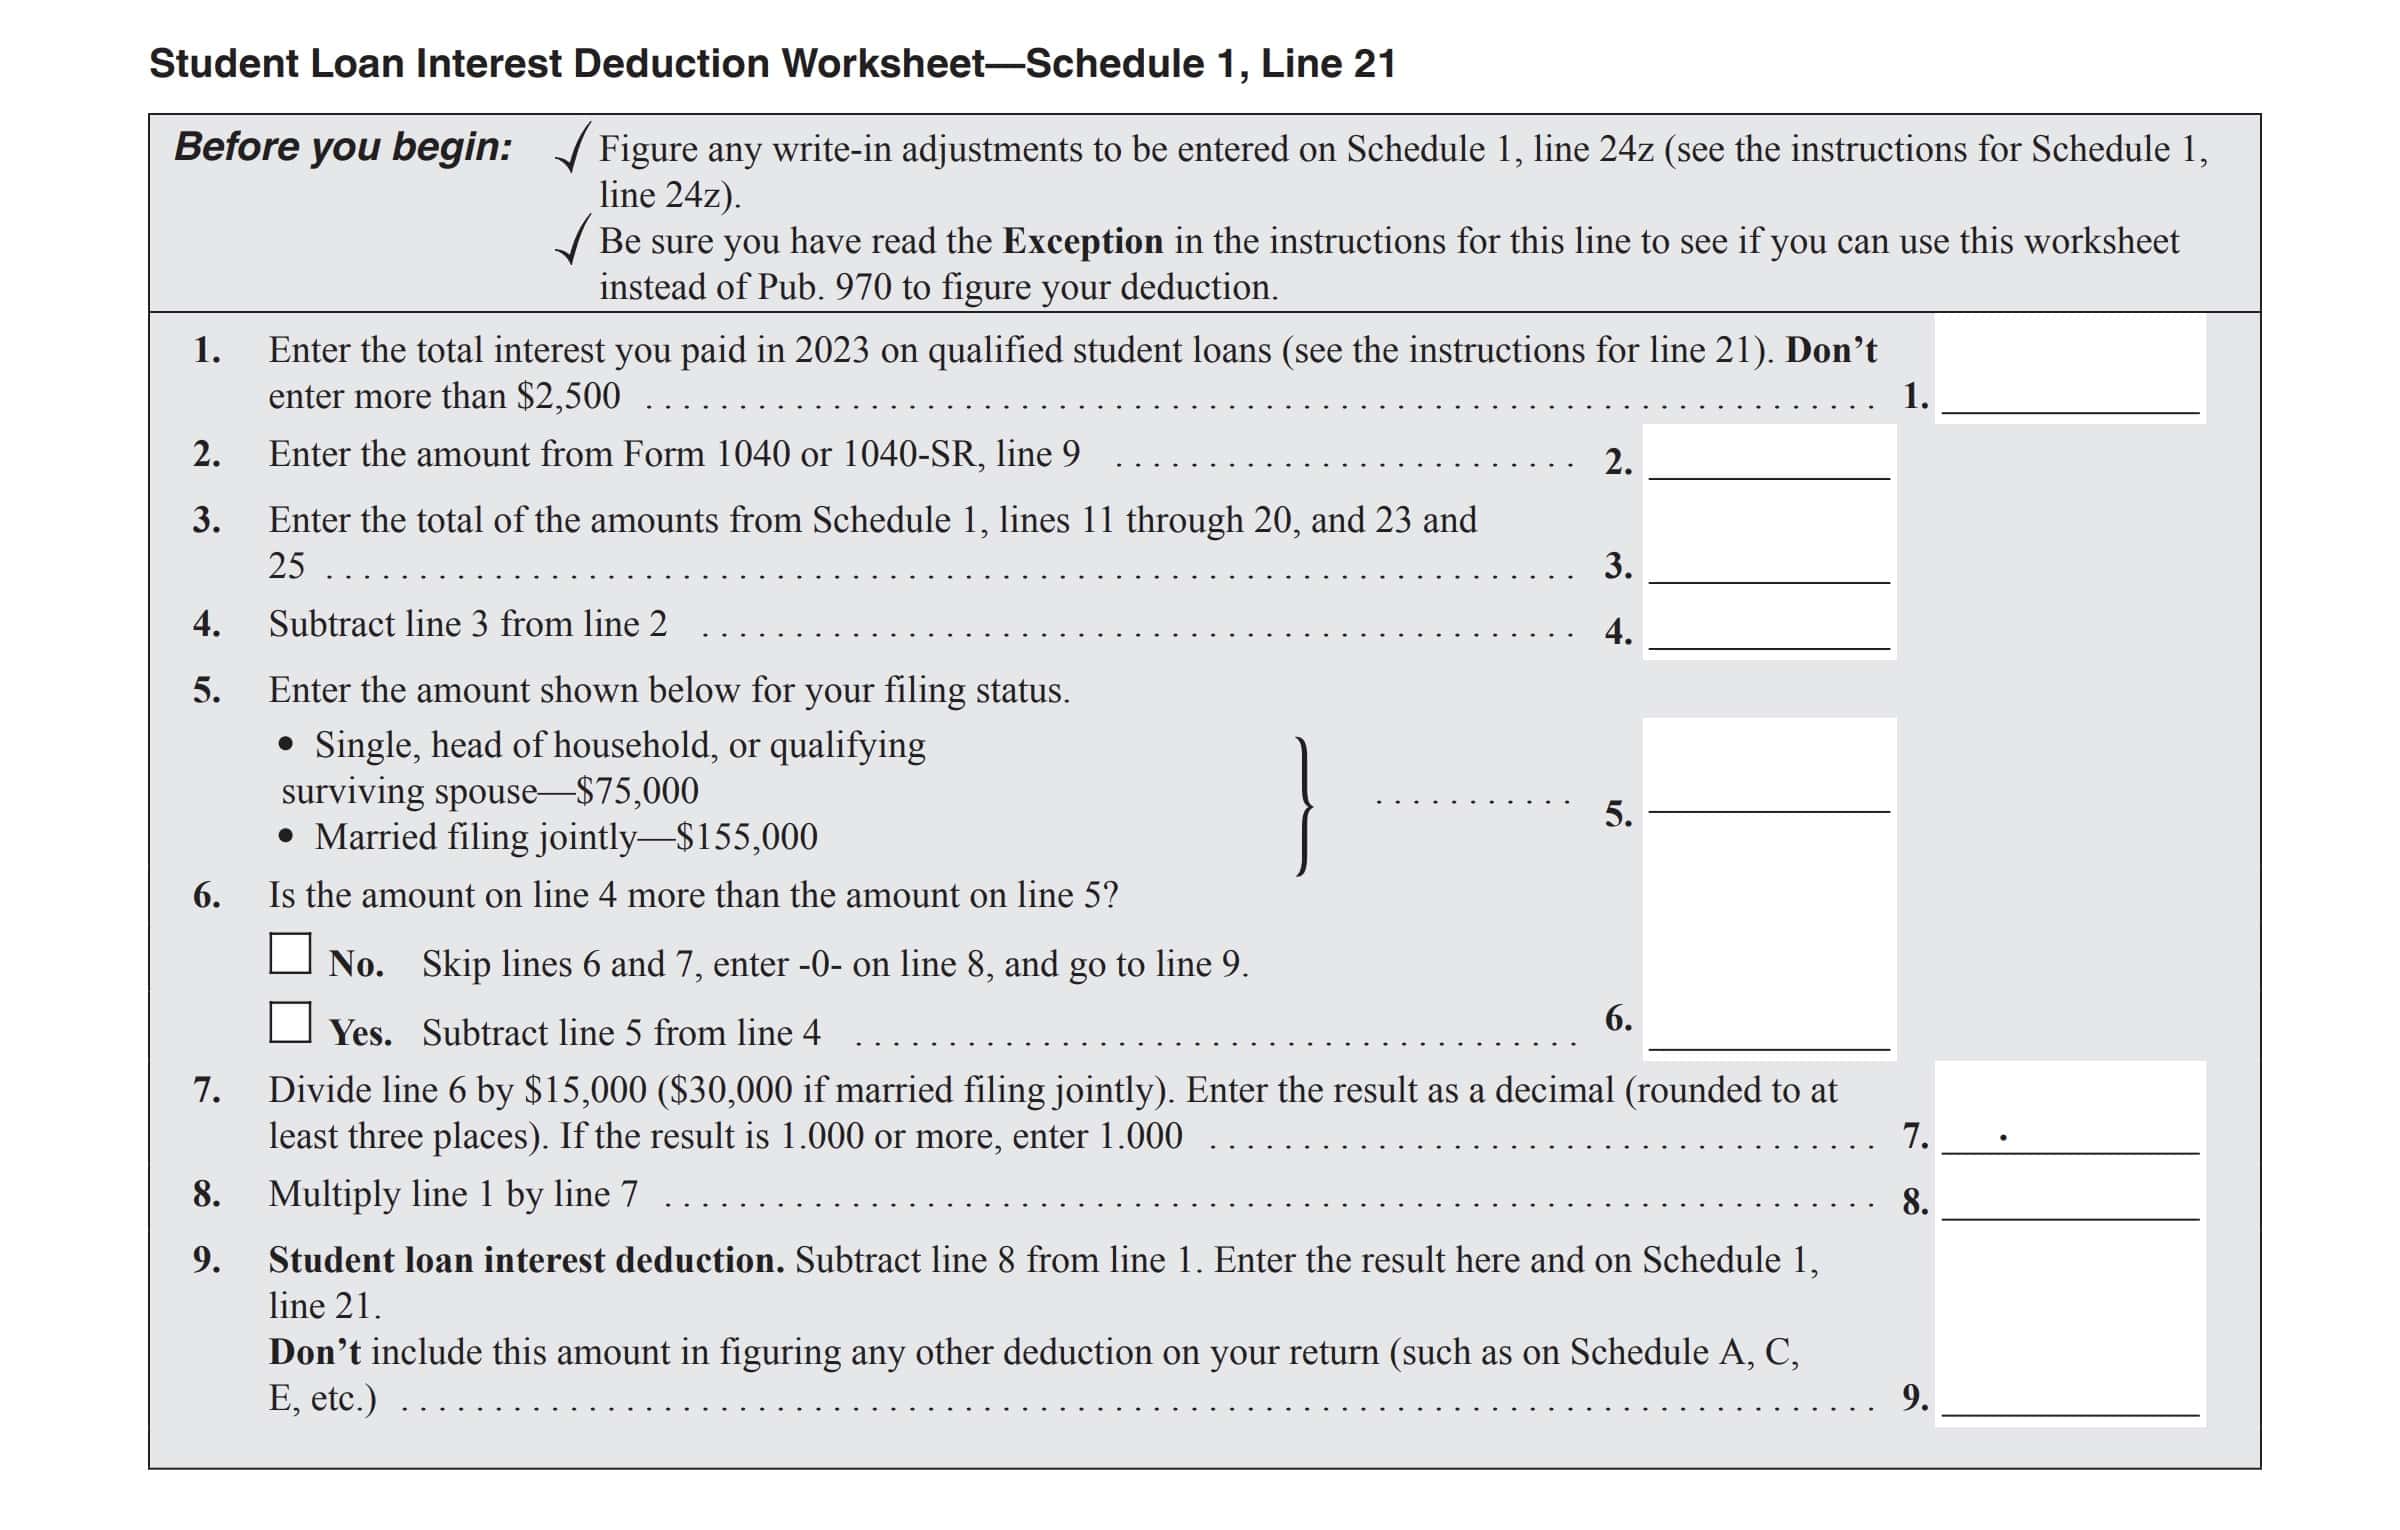 student loan interest deduction worksheet, schedule 1, line 21